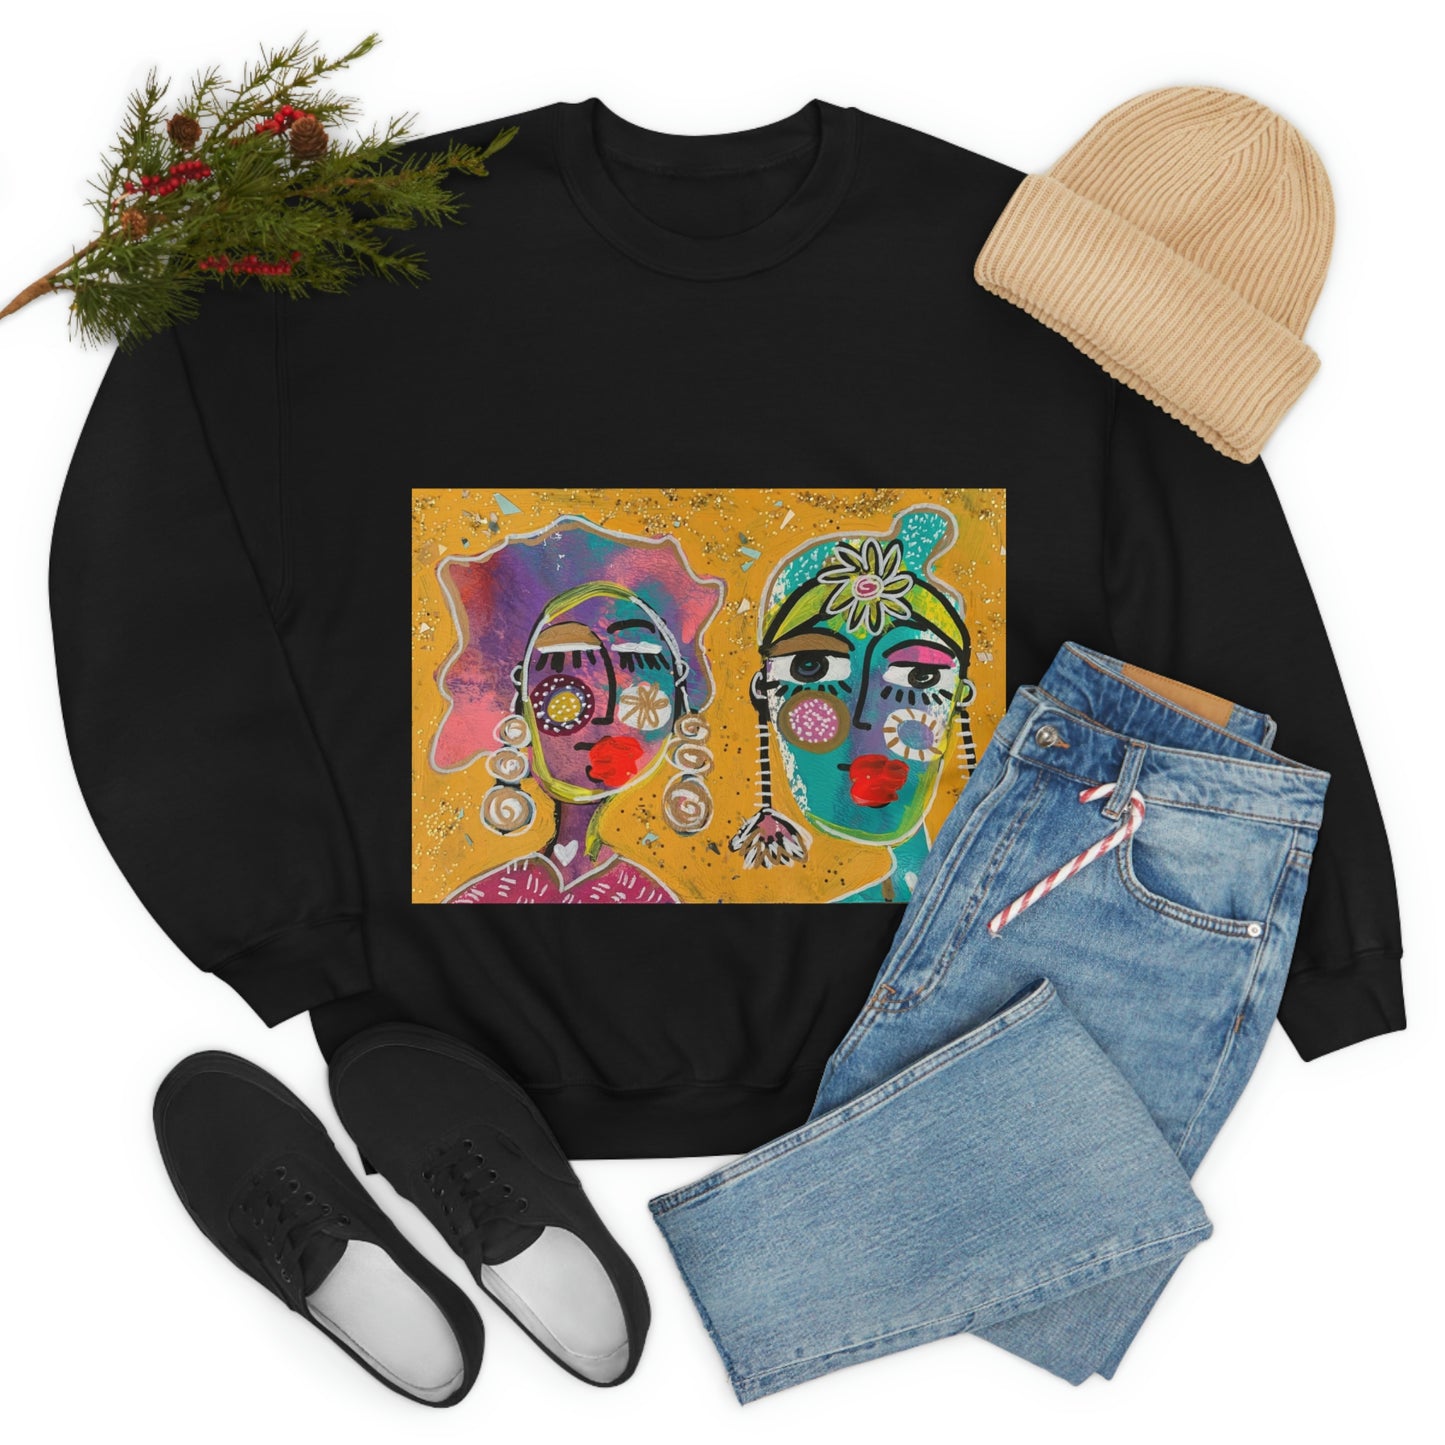 "OLD FRIENDS" Girl Talk Art Series Unisex Heavy Blend Crewneck Sweatshirt